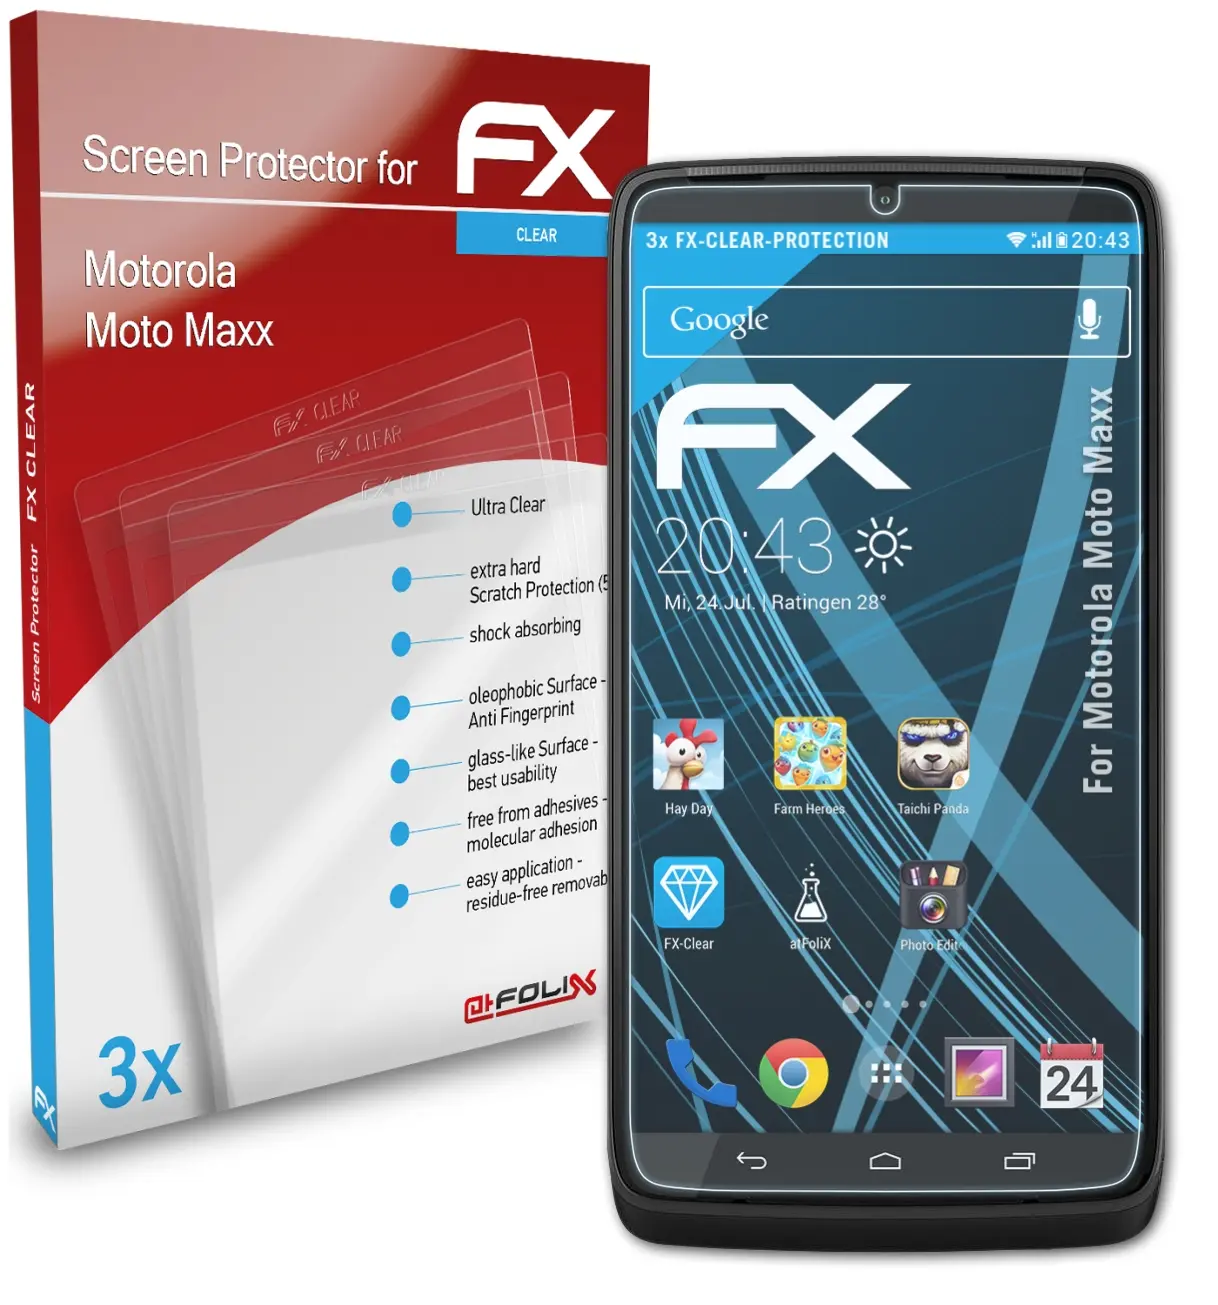 Motorola Moto Maxx 1